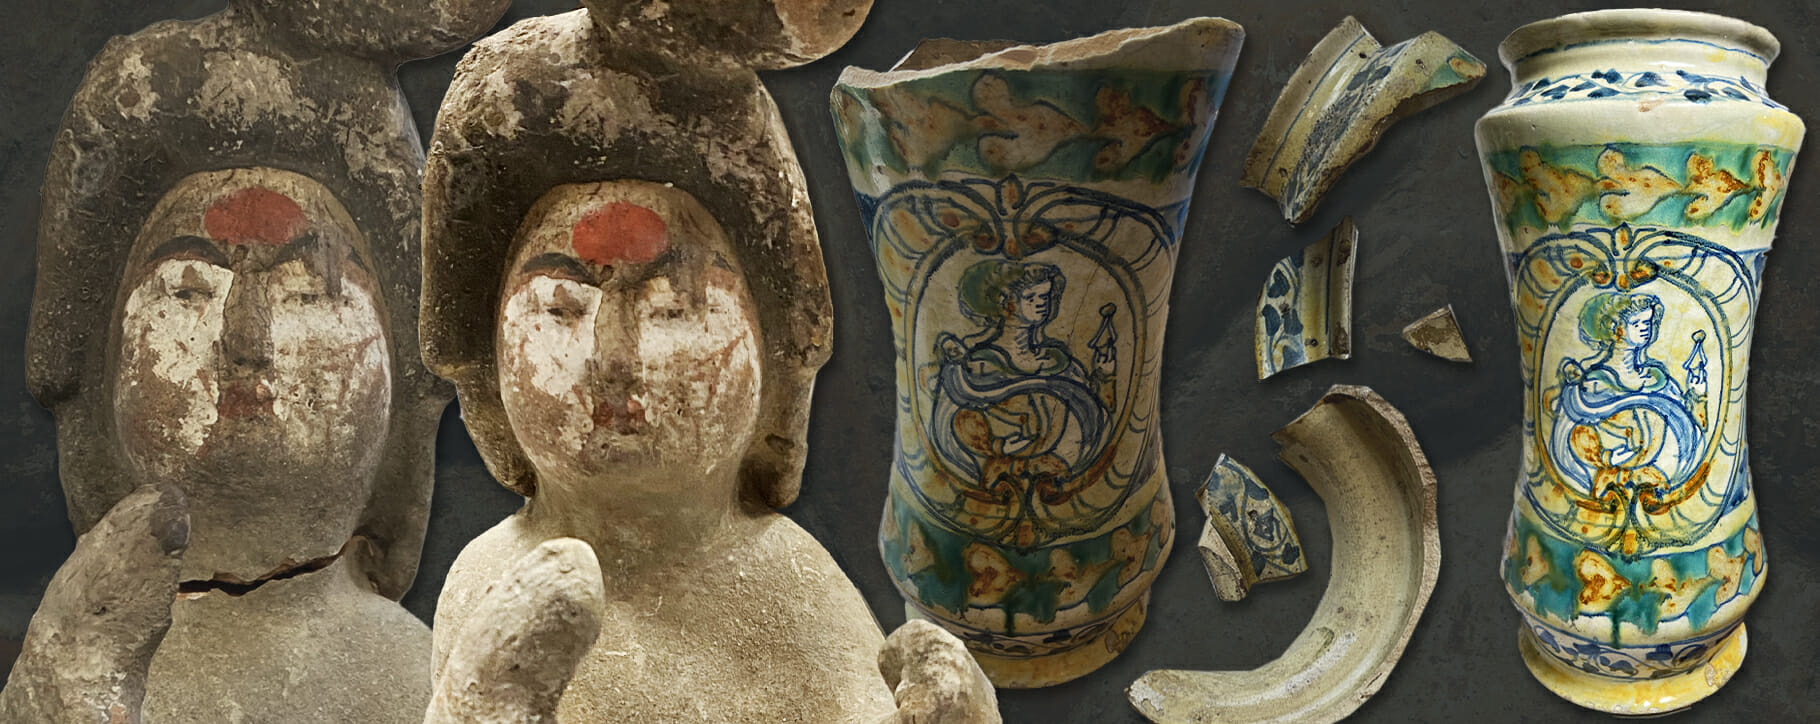 Terracotta examples